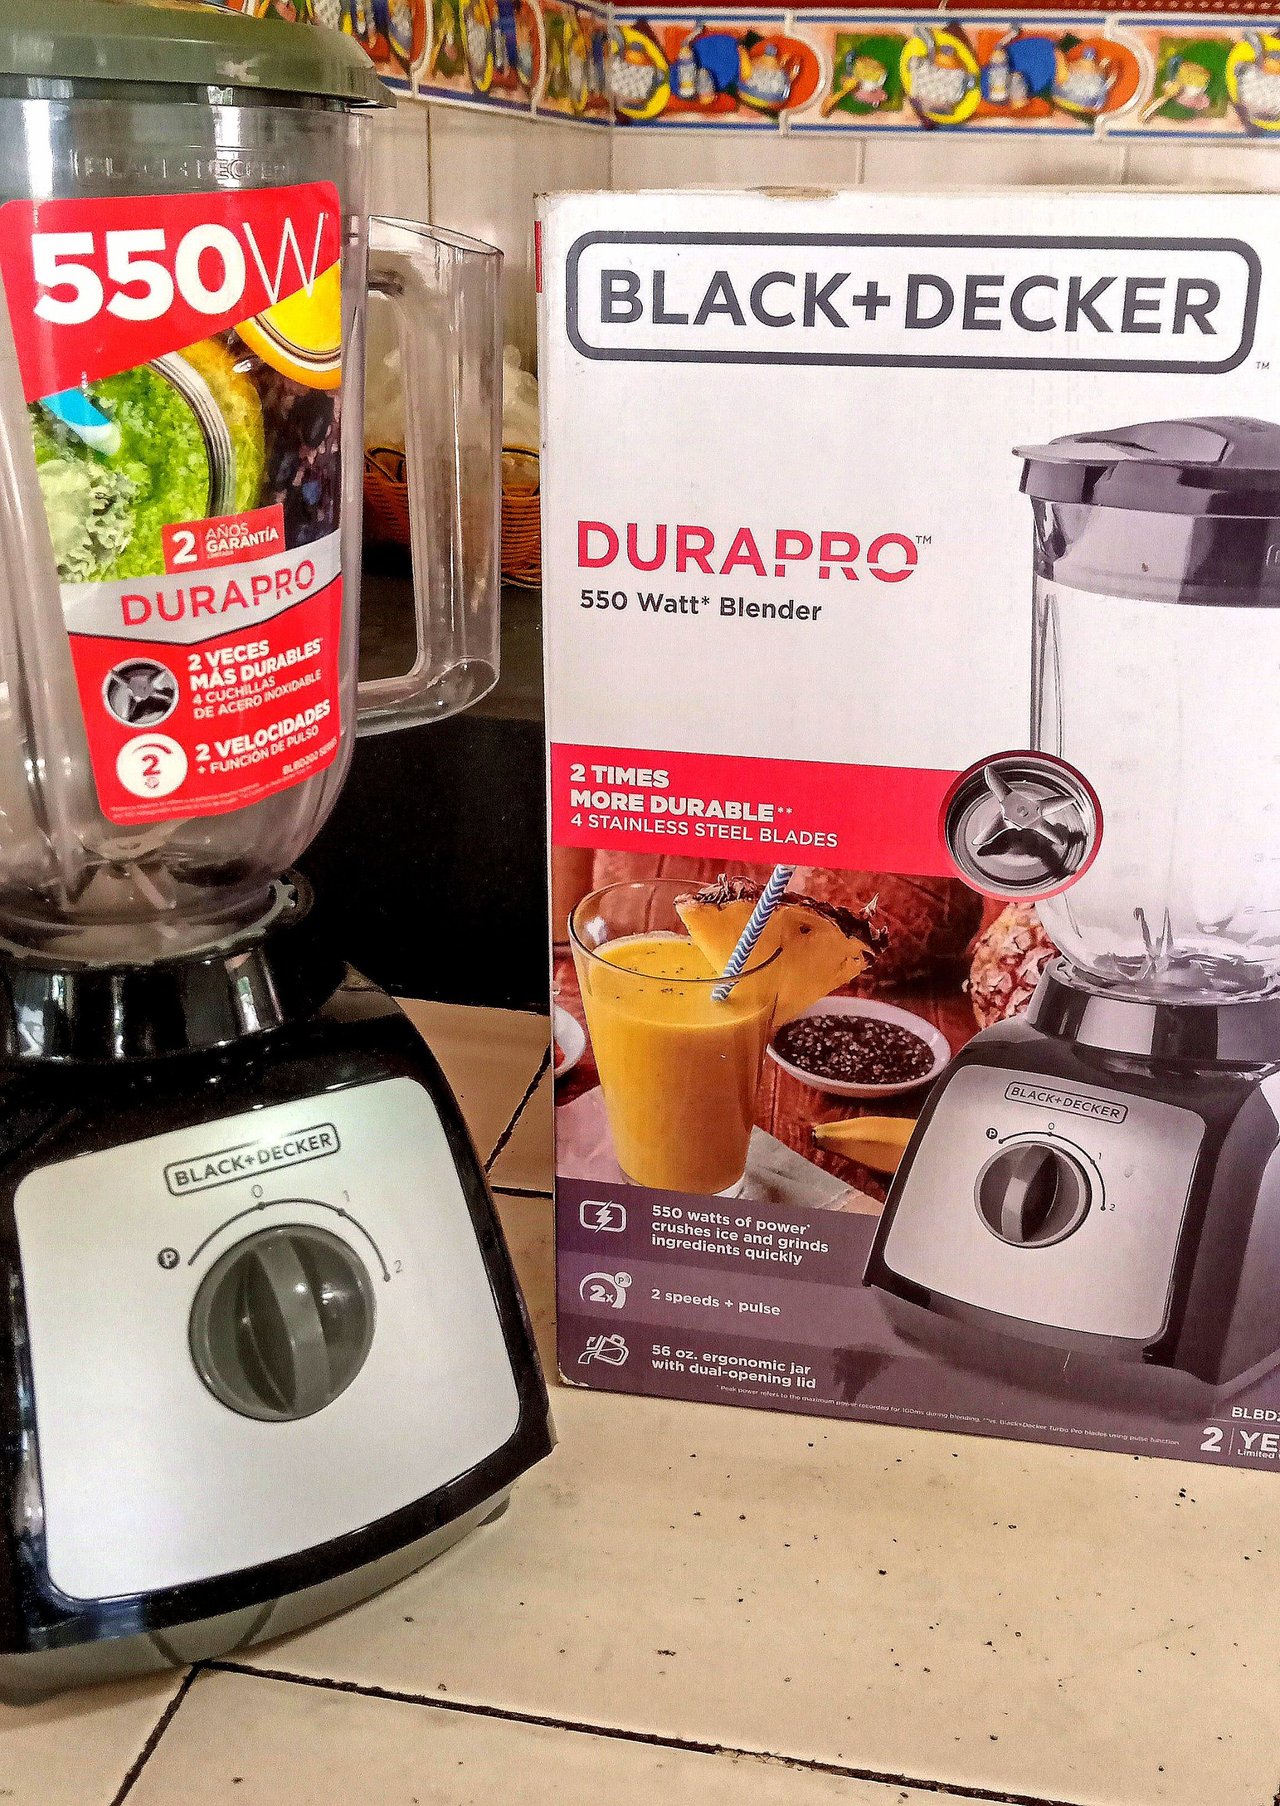 *New* Black& Decker DURAPRO 550 Watt* Blender for Sale in New